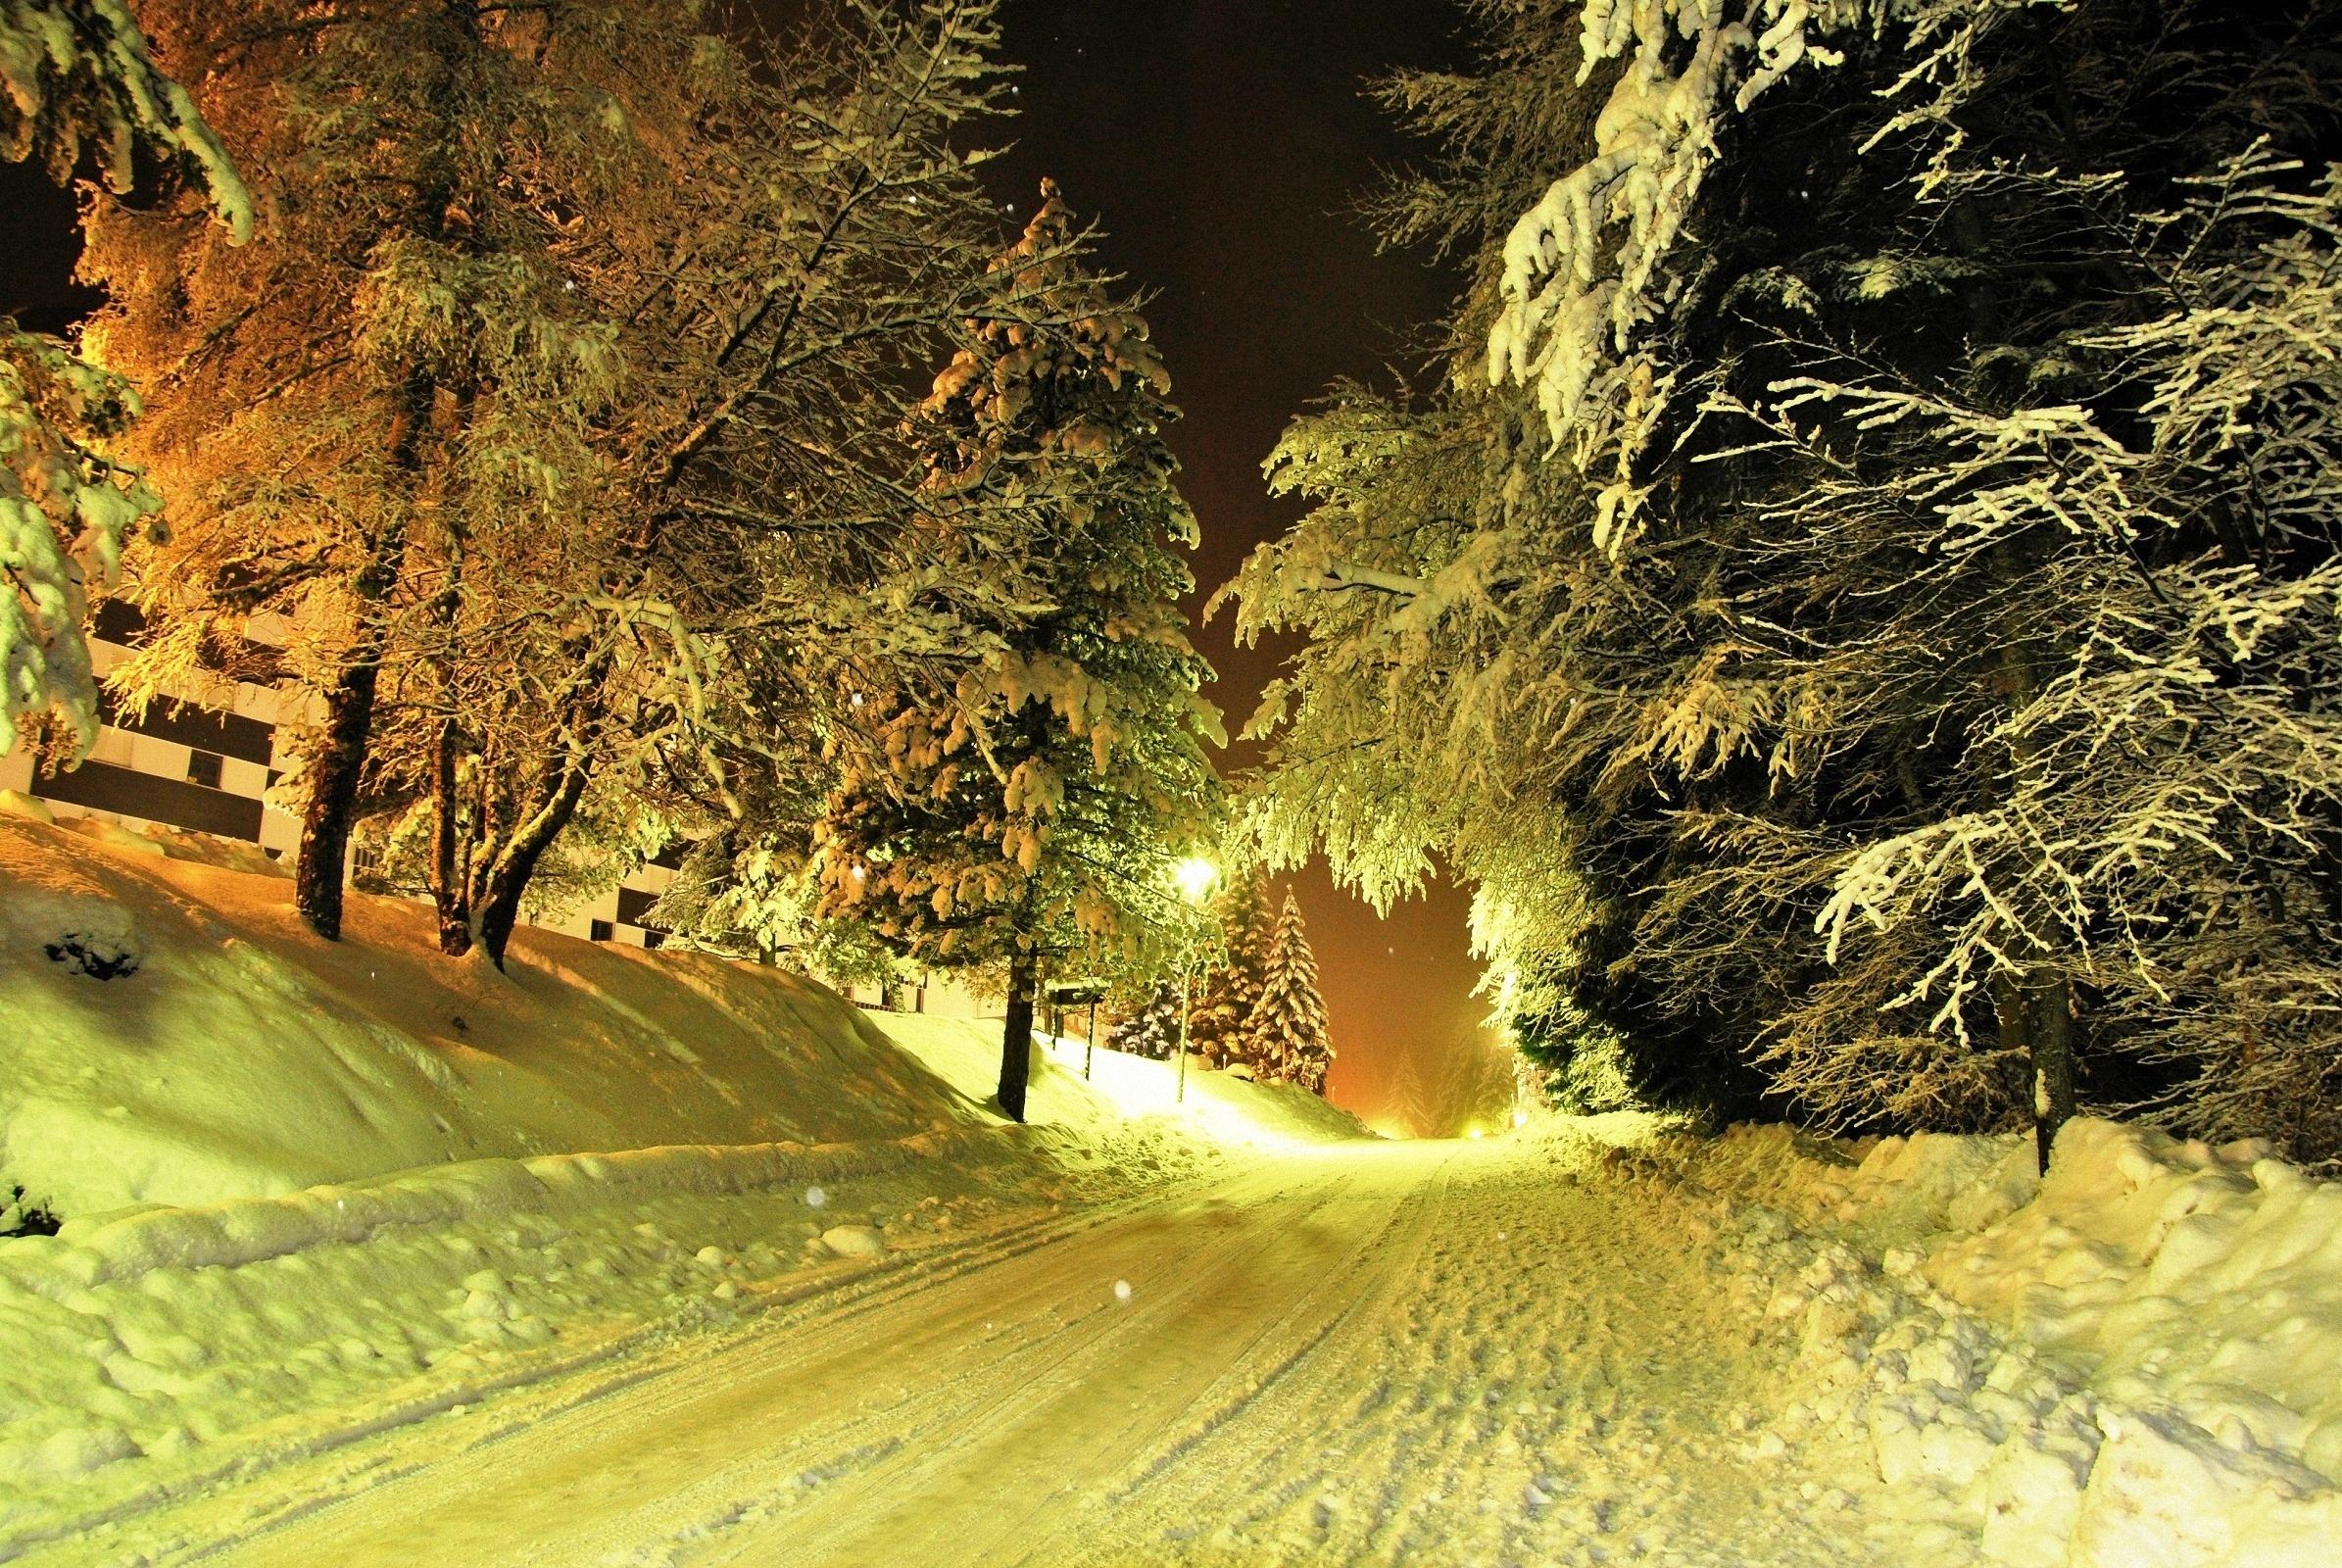 Снег фонарь - фото и картинки: 139 штук